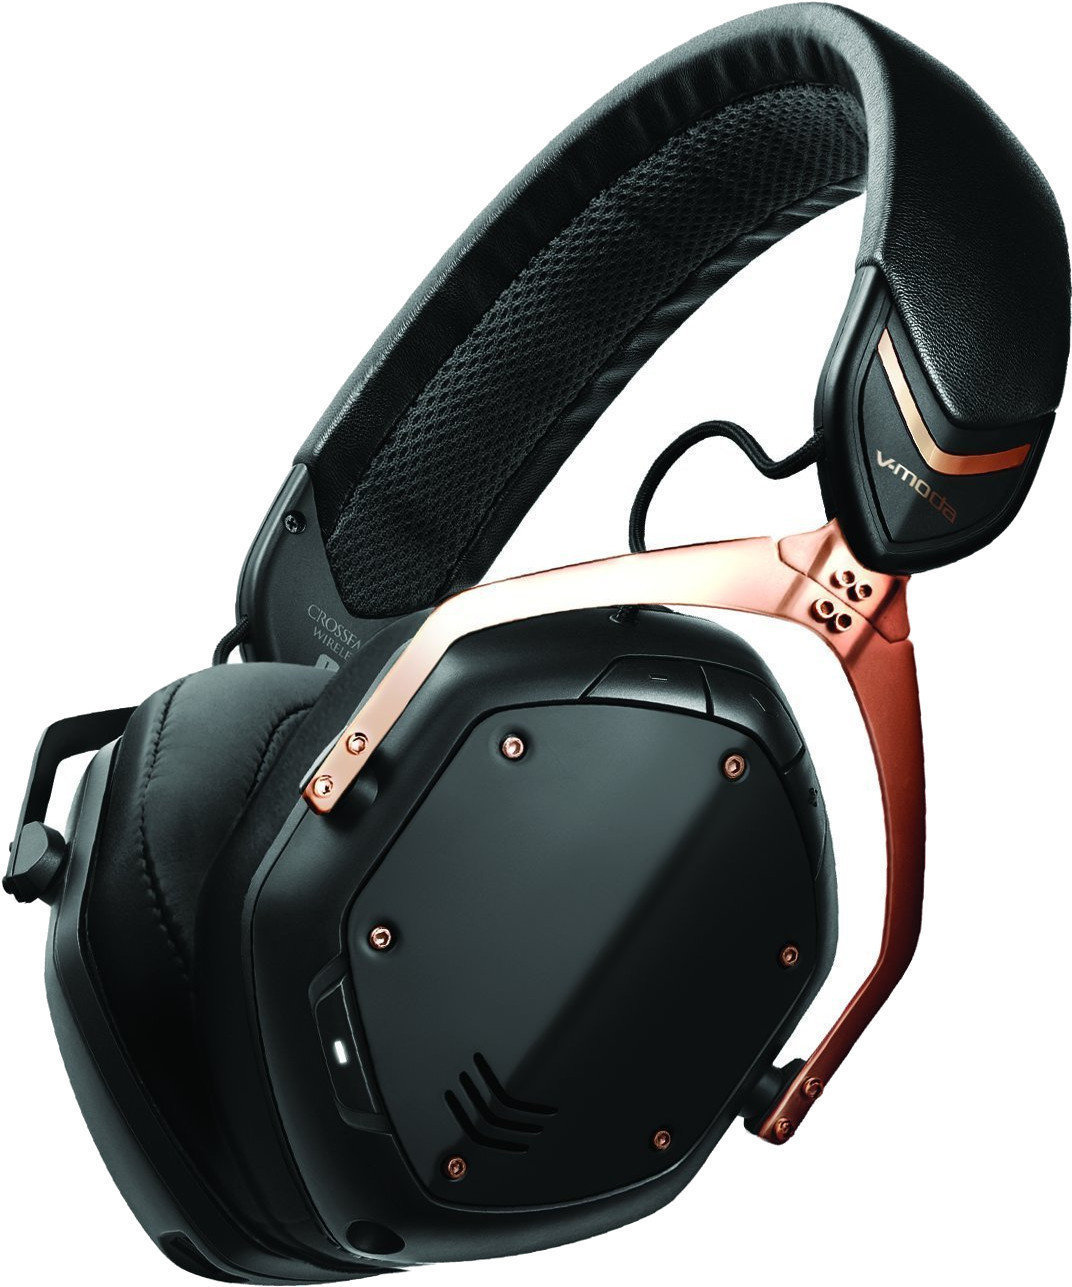 Wireless On-ear headphones V-Moda Crossfade 2 Wireless Rose Gold Black